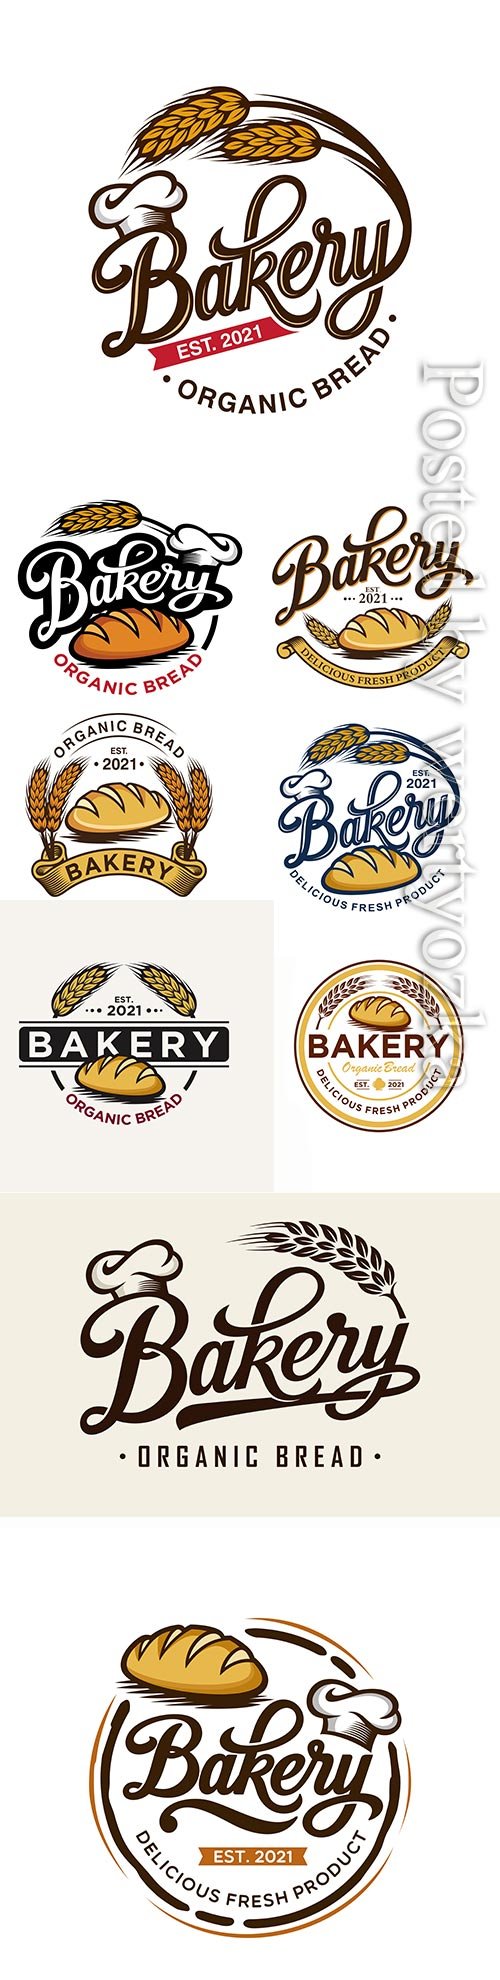 Vintage bakery logo vector template